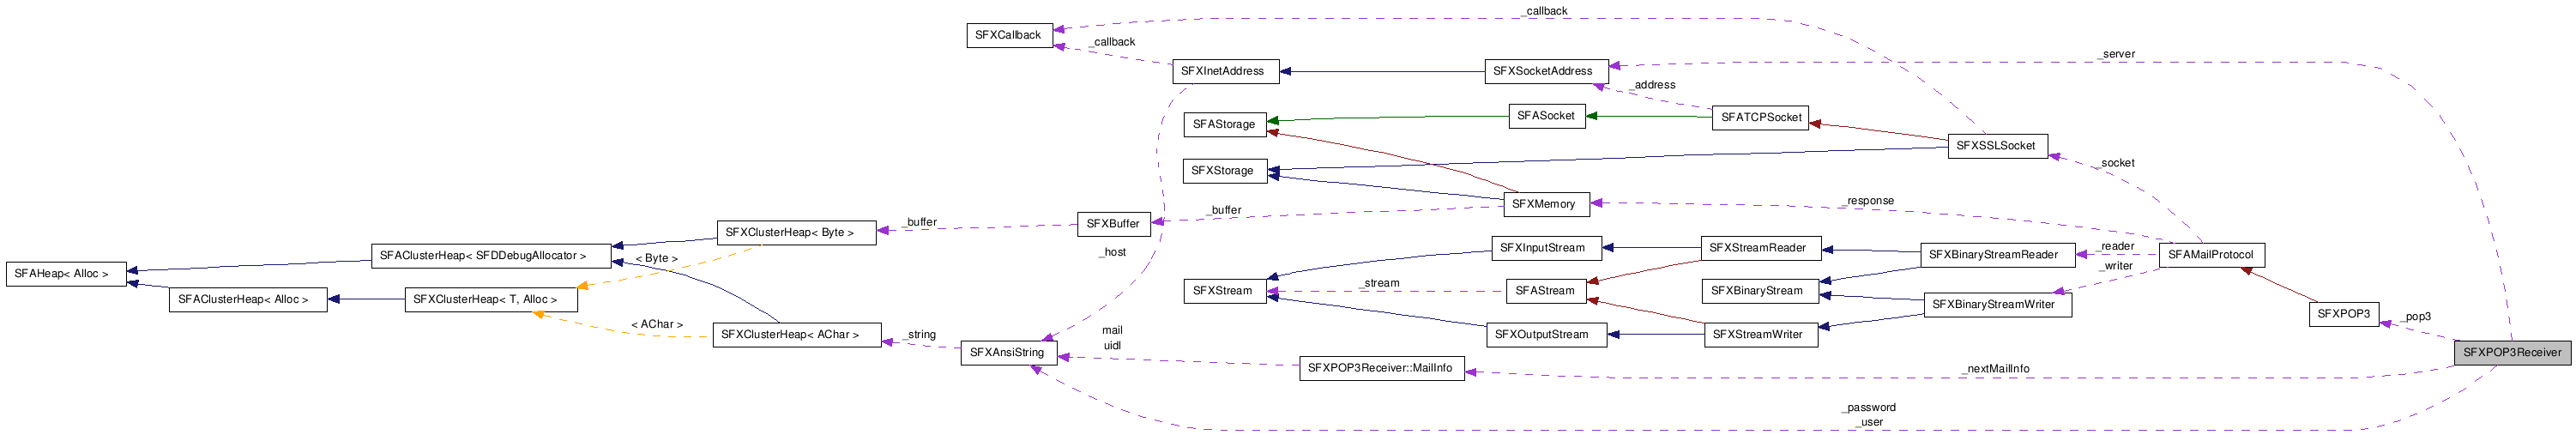  Collaboration diagram of SFXPOP3ReceiverClass